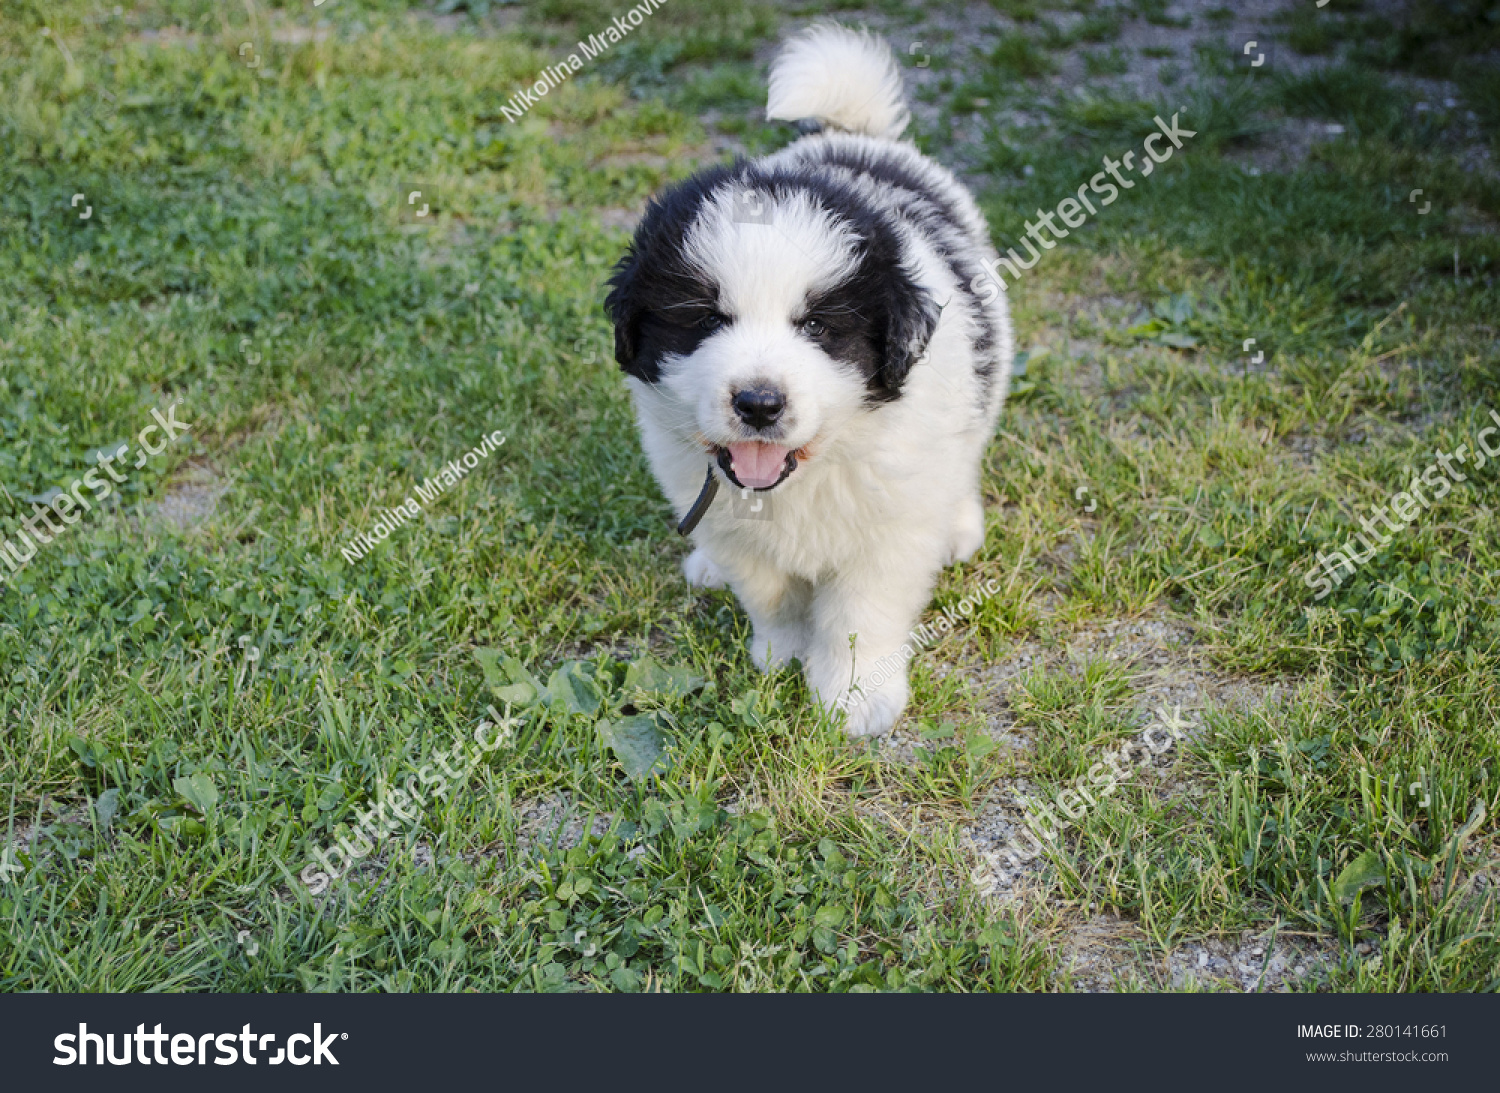 Croatian Shepherd Dog Puppy Tornjak Animals Wildlife Stock Image 280141661